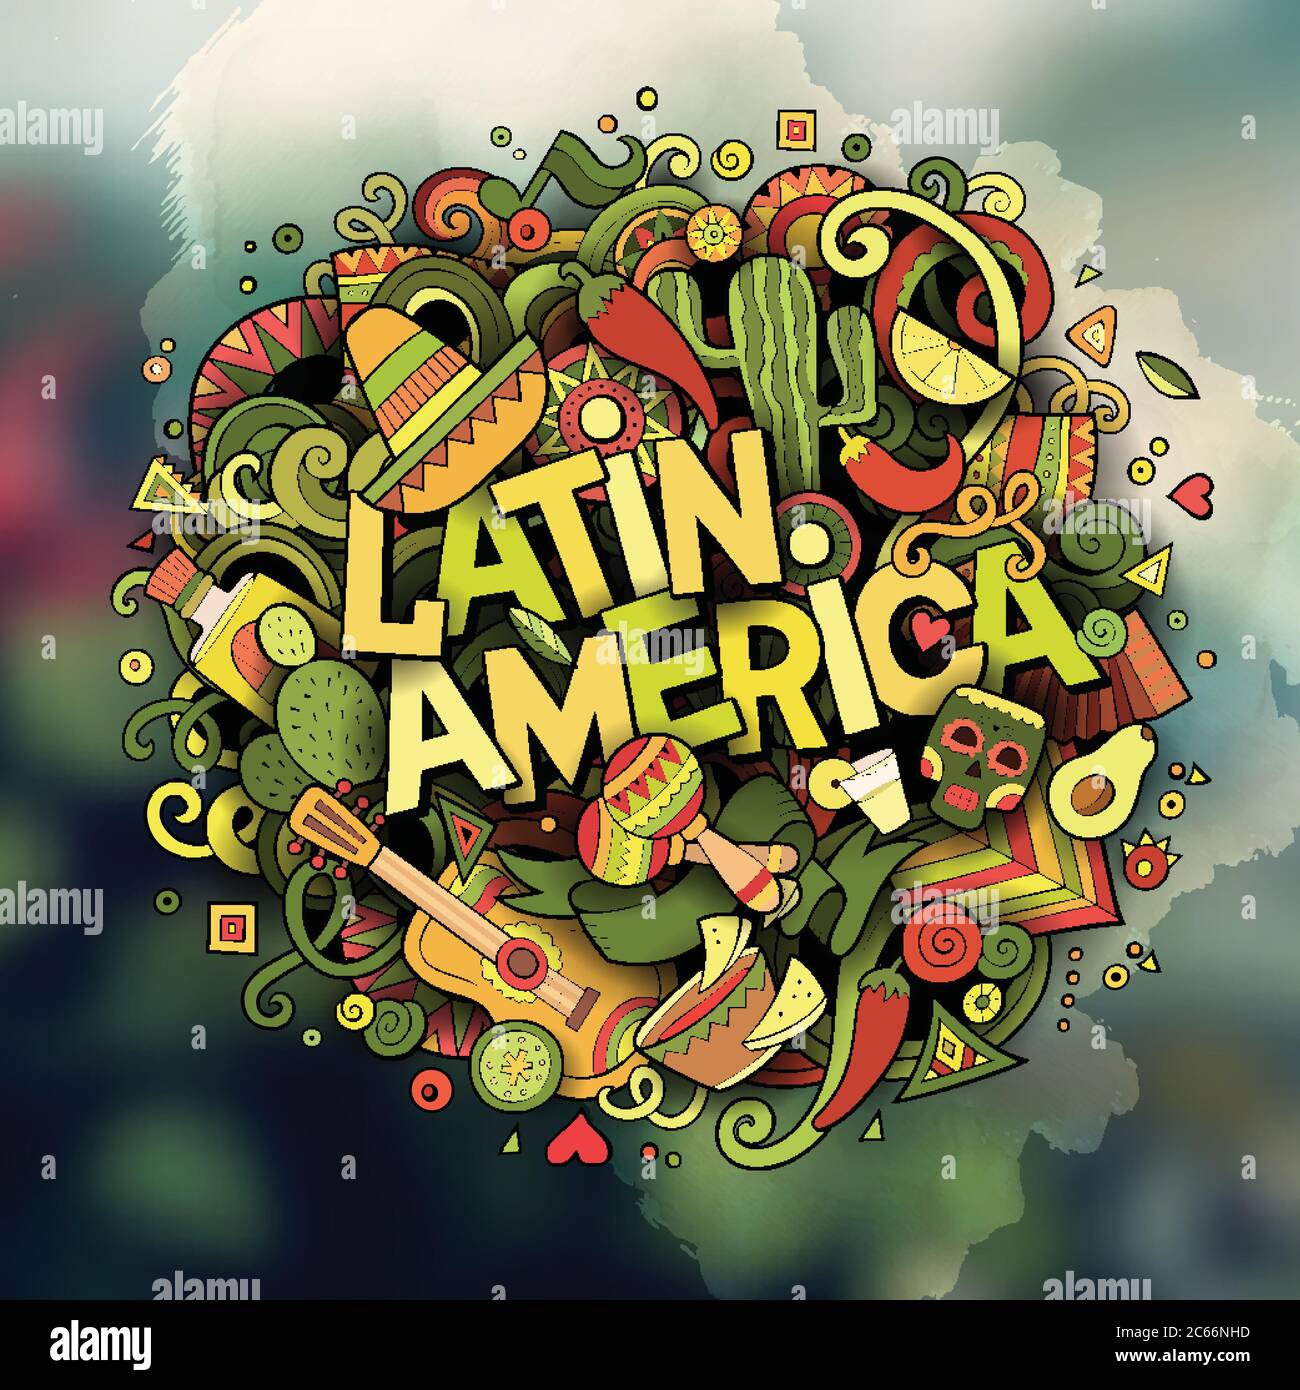 https://c8.alamy.com/comp/2C66NHD/cartoon-vector-hand-drawn-doodle-latin-america-word-illustration-2C66NHD.jpg